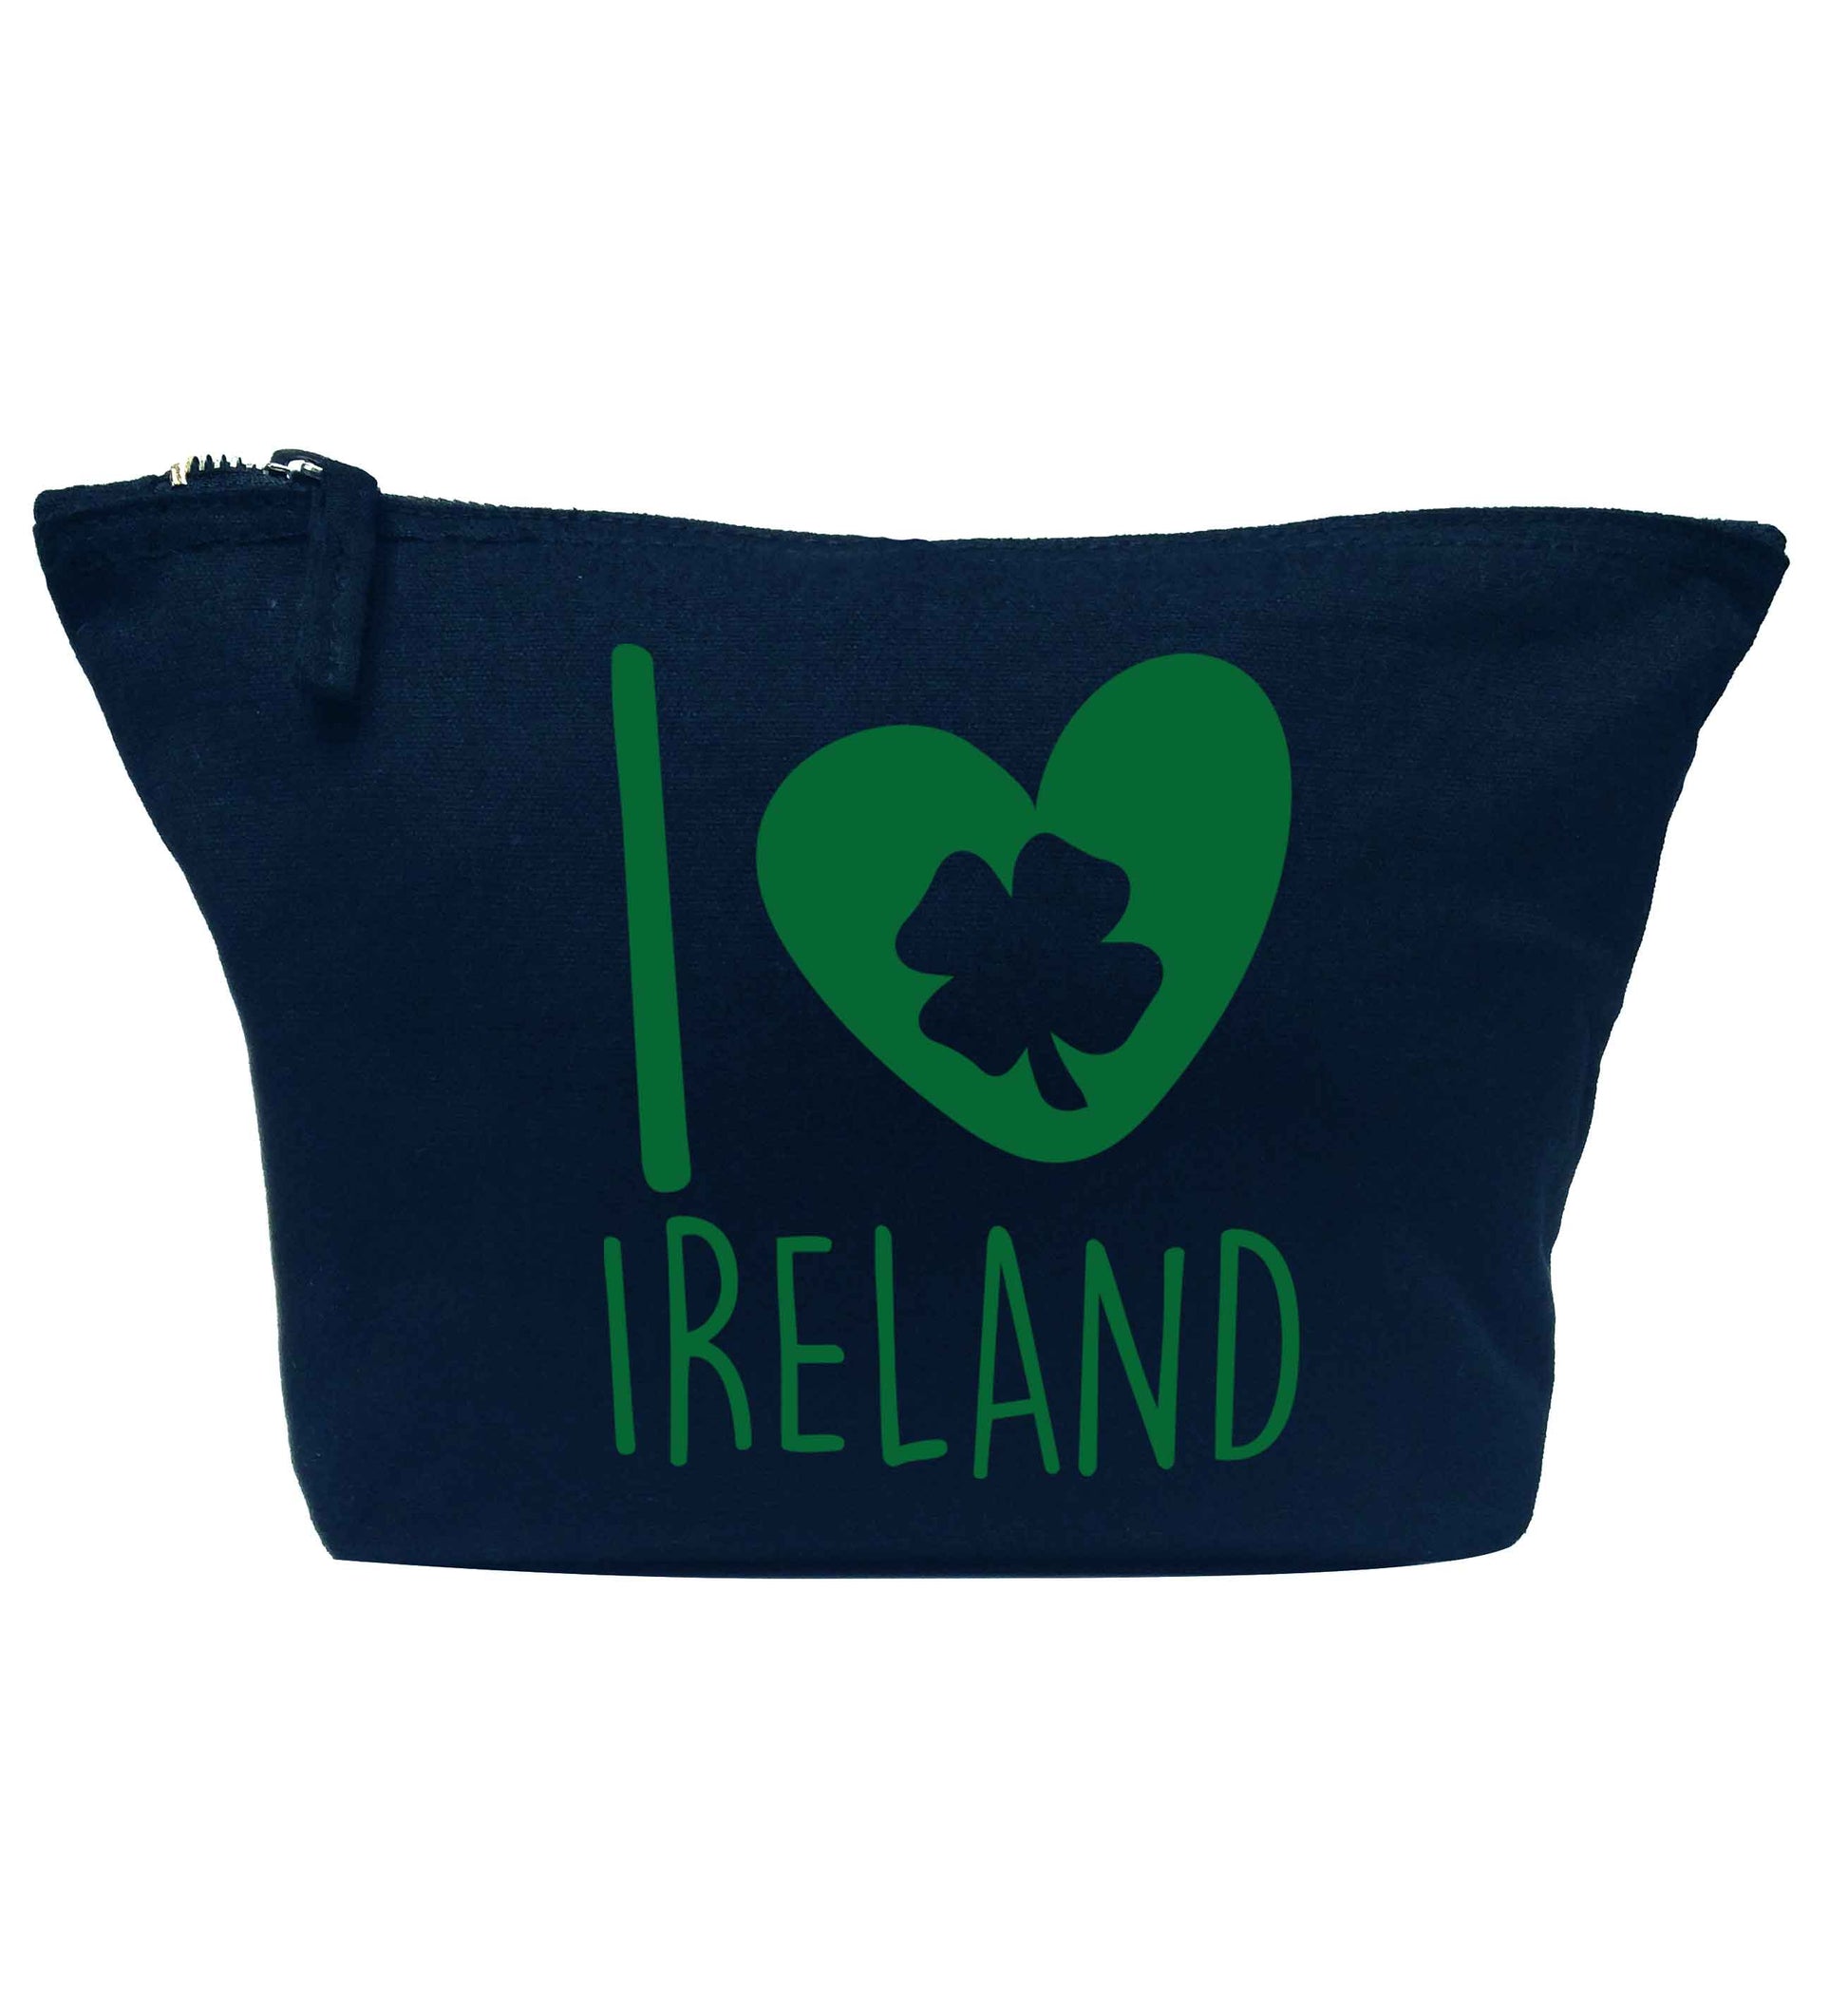 I love Ireland navy makeup bag